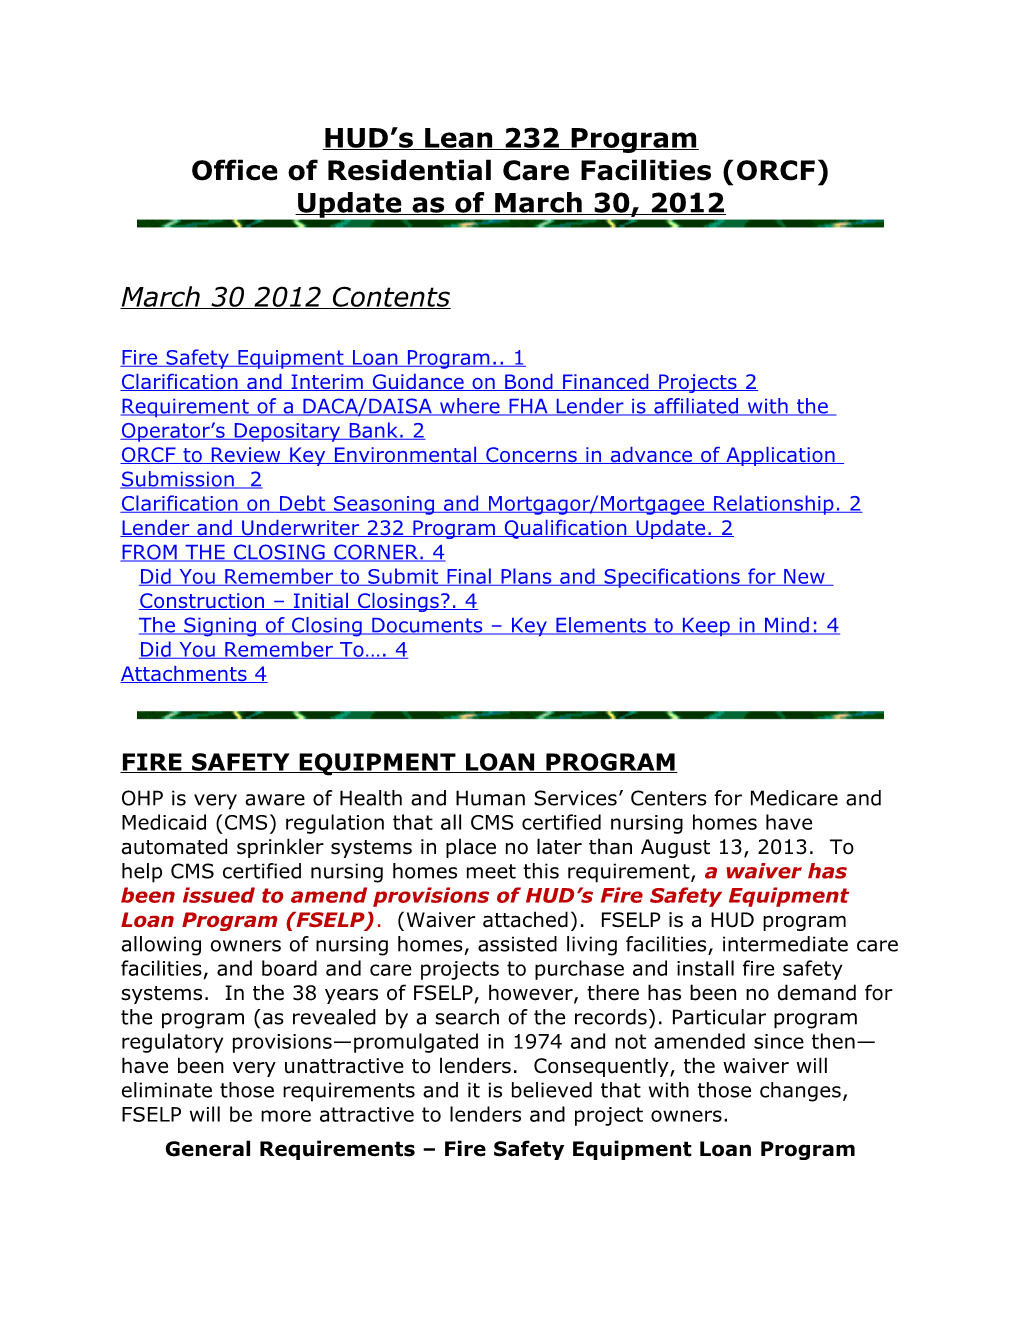 Fire Safety Equipment Loan Program 1